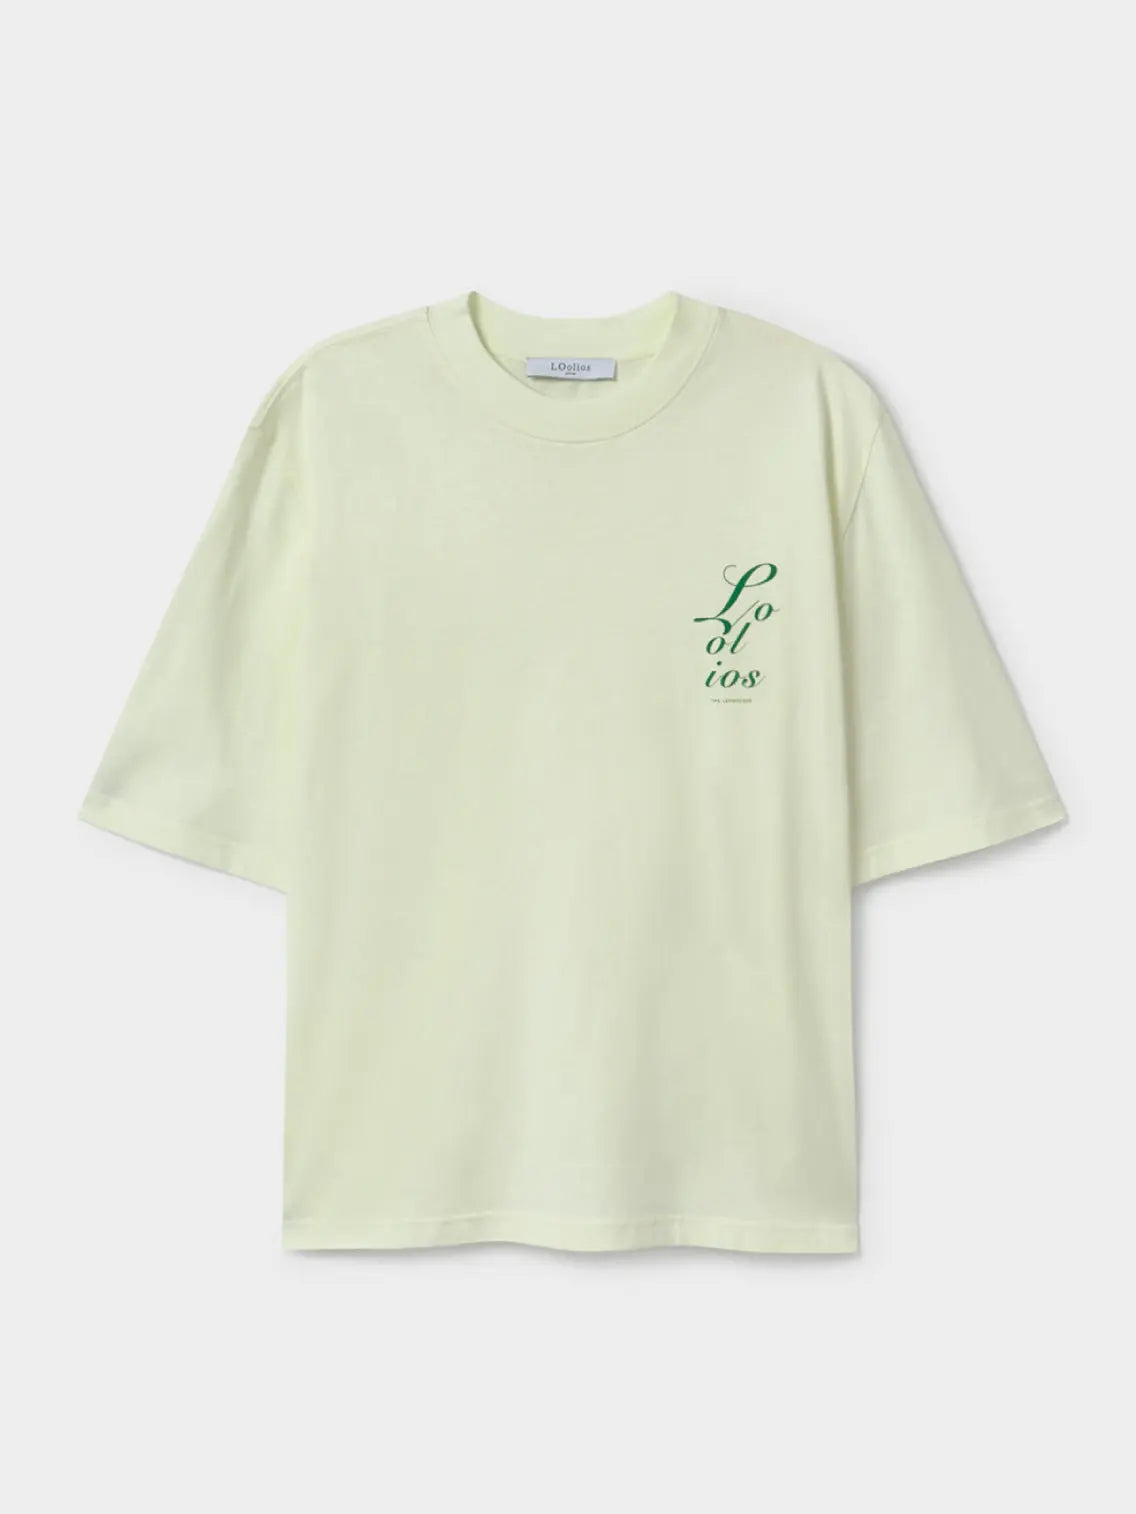 Matisse Mint Green T-Shirt LOolios